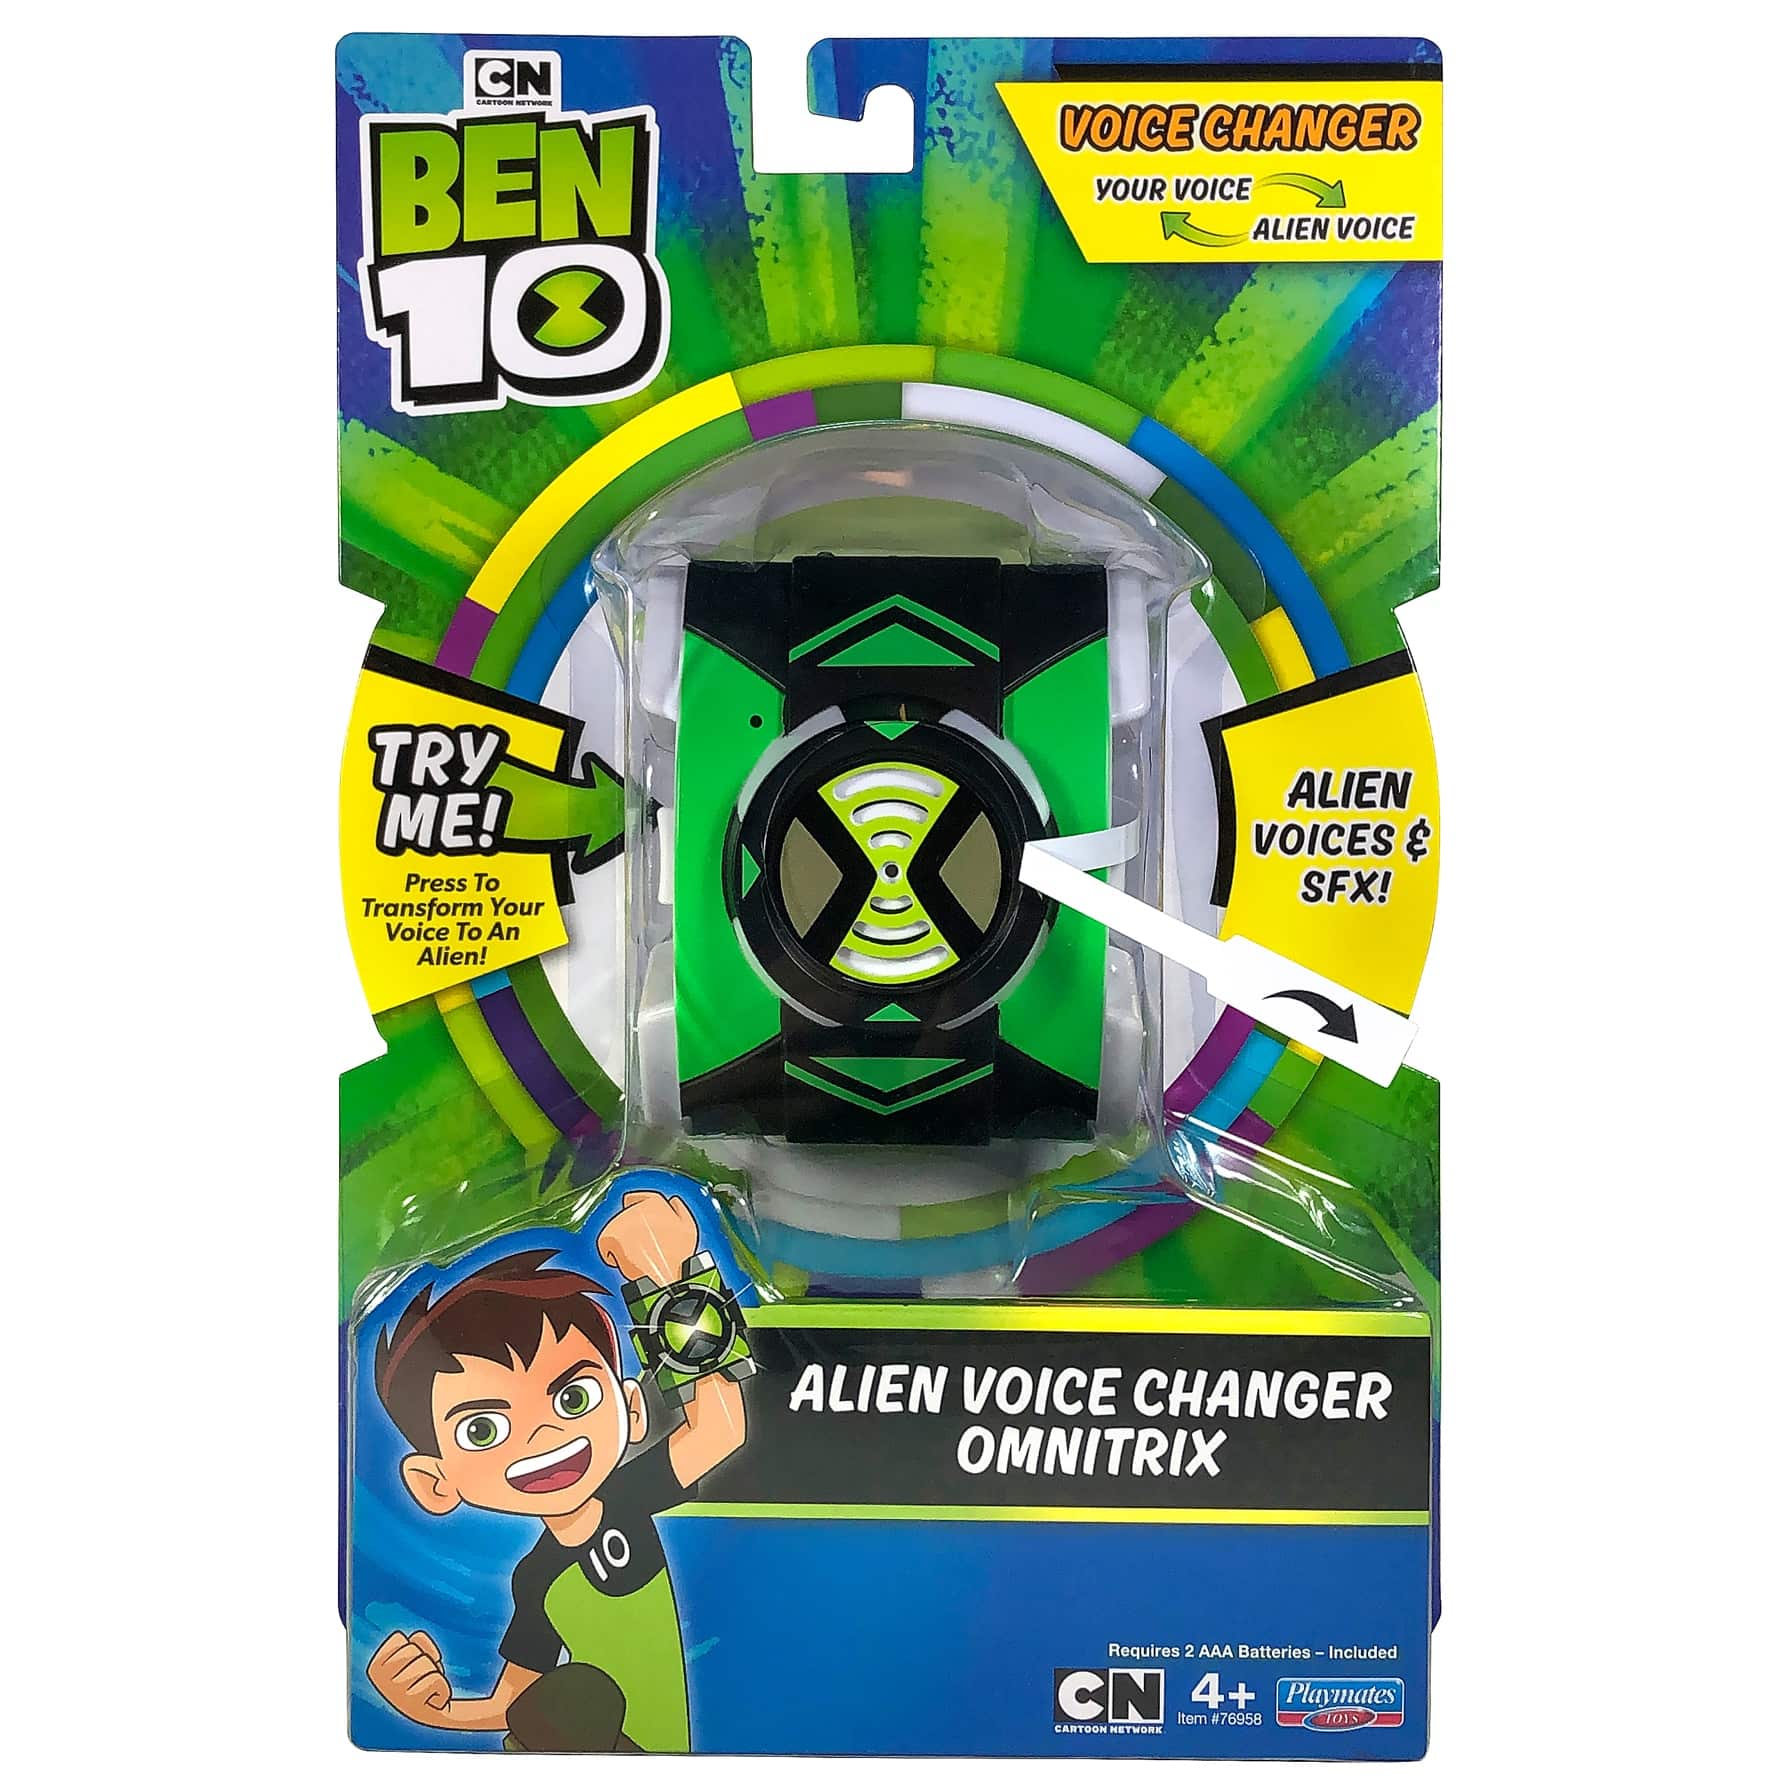 Buy Ben10 Alien Voice Changer Omnitrix Online in Dubai & the UAE|Toys 'R' Us